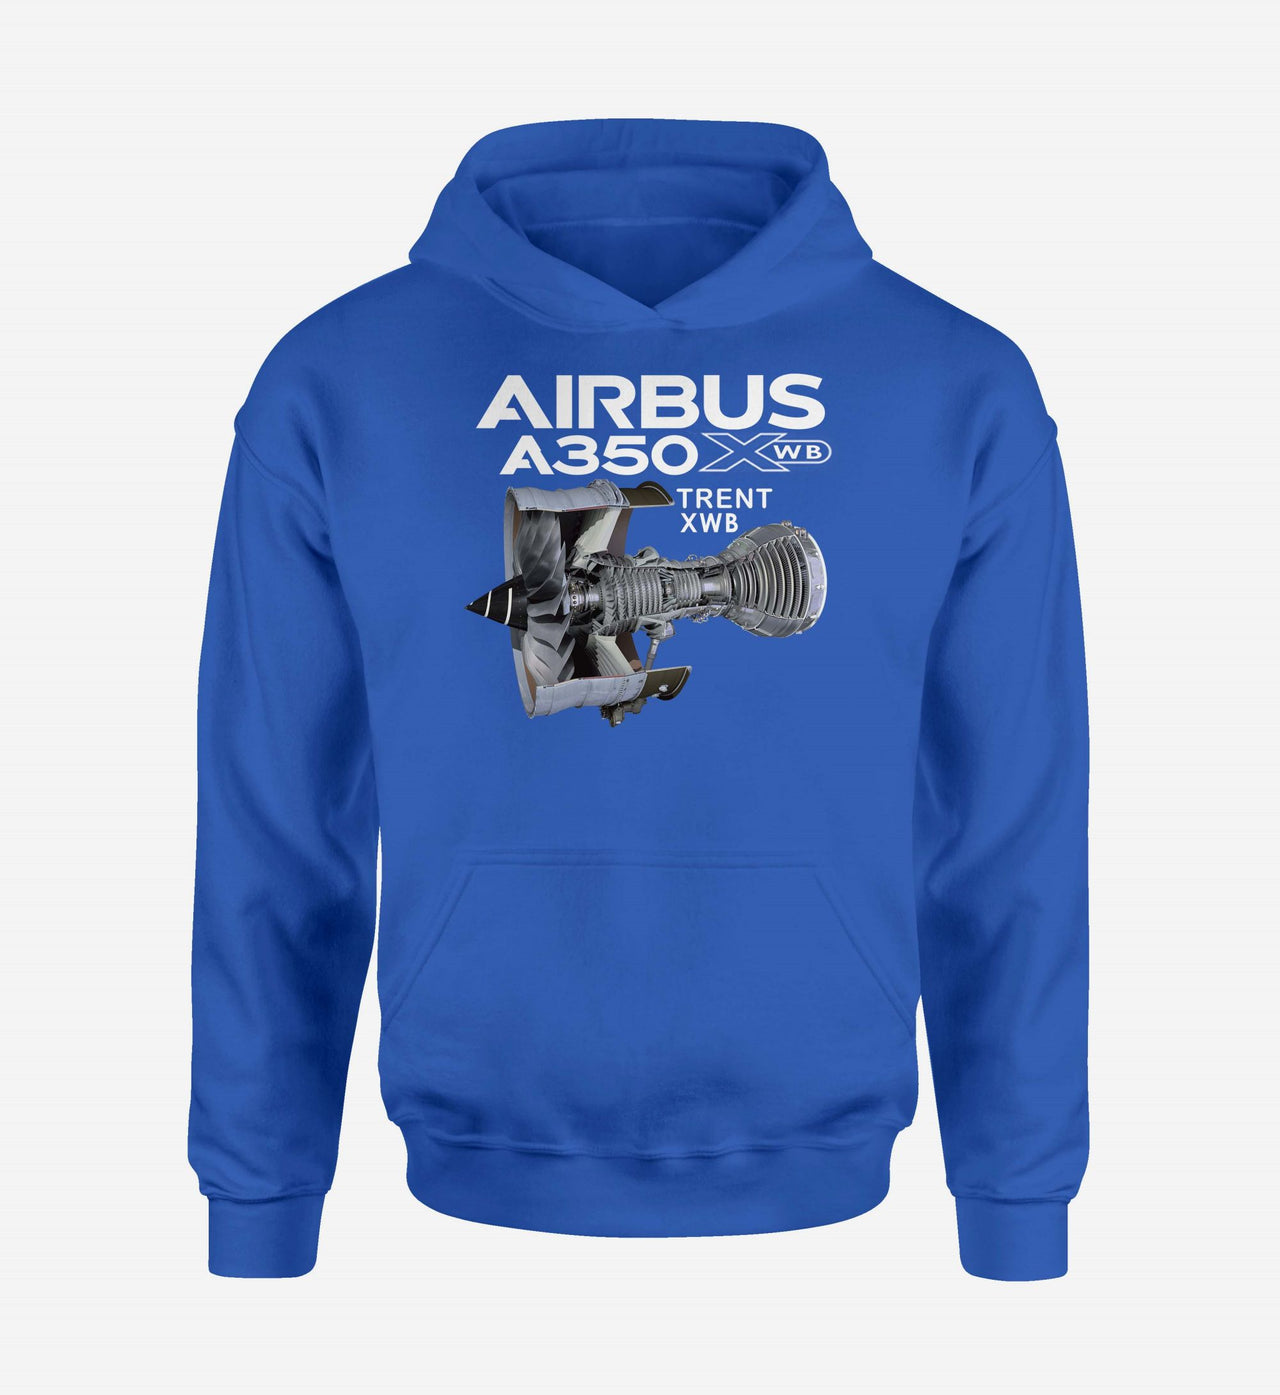 Airbus A350 & Trent Wxb Engine Designed Hoodies